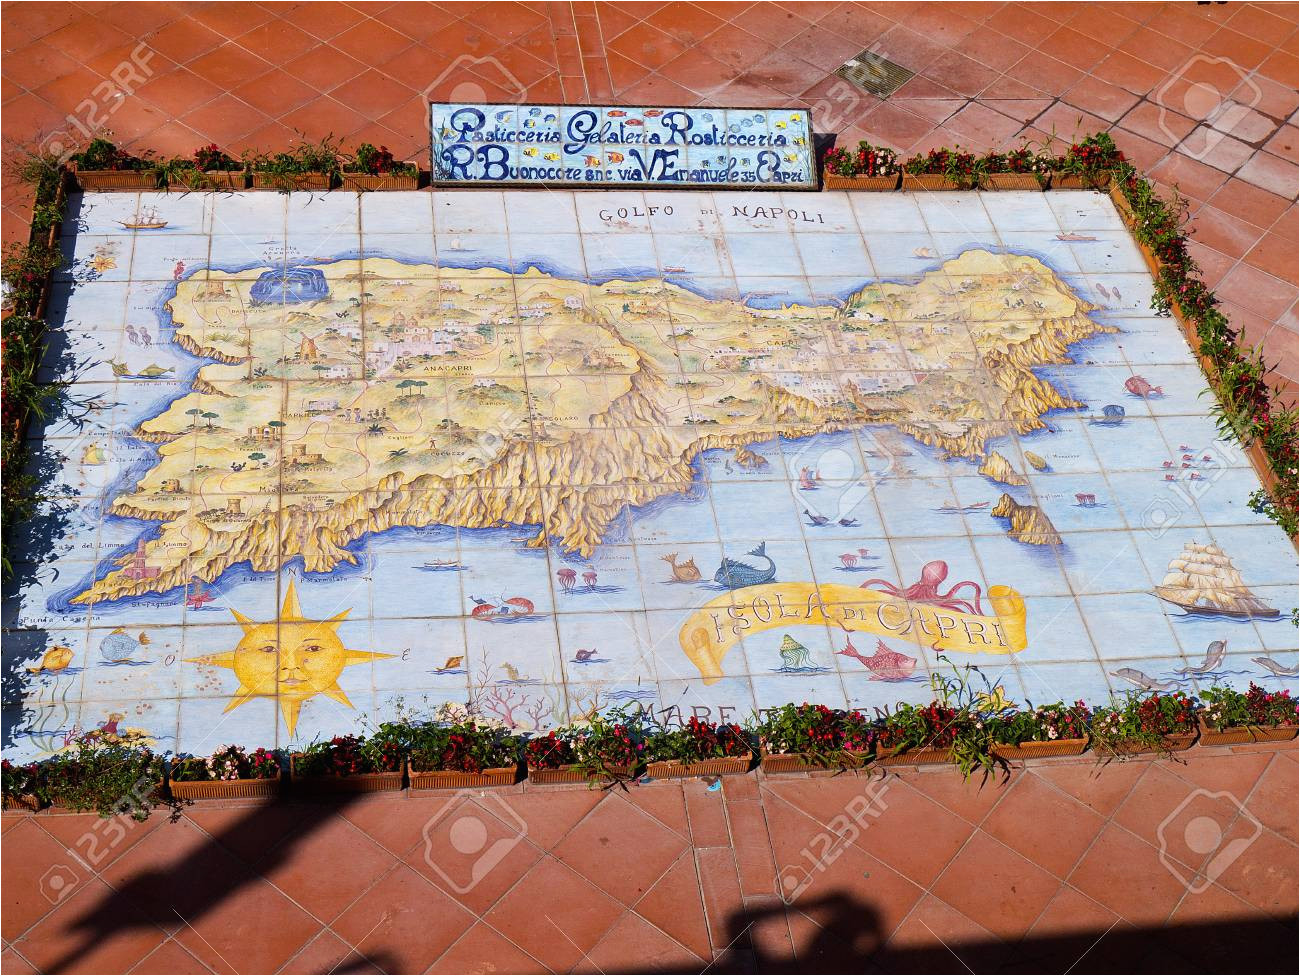 Capri island Italy Map Ceramic Map Of the island Of Capri Italy Stock Photo Picture and